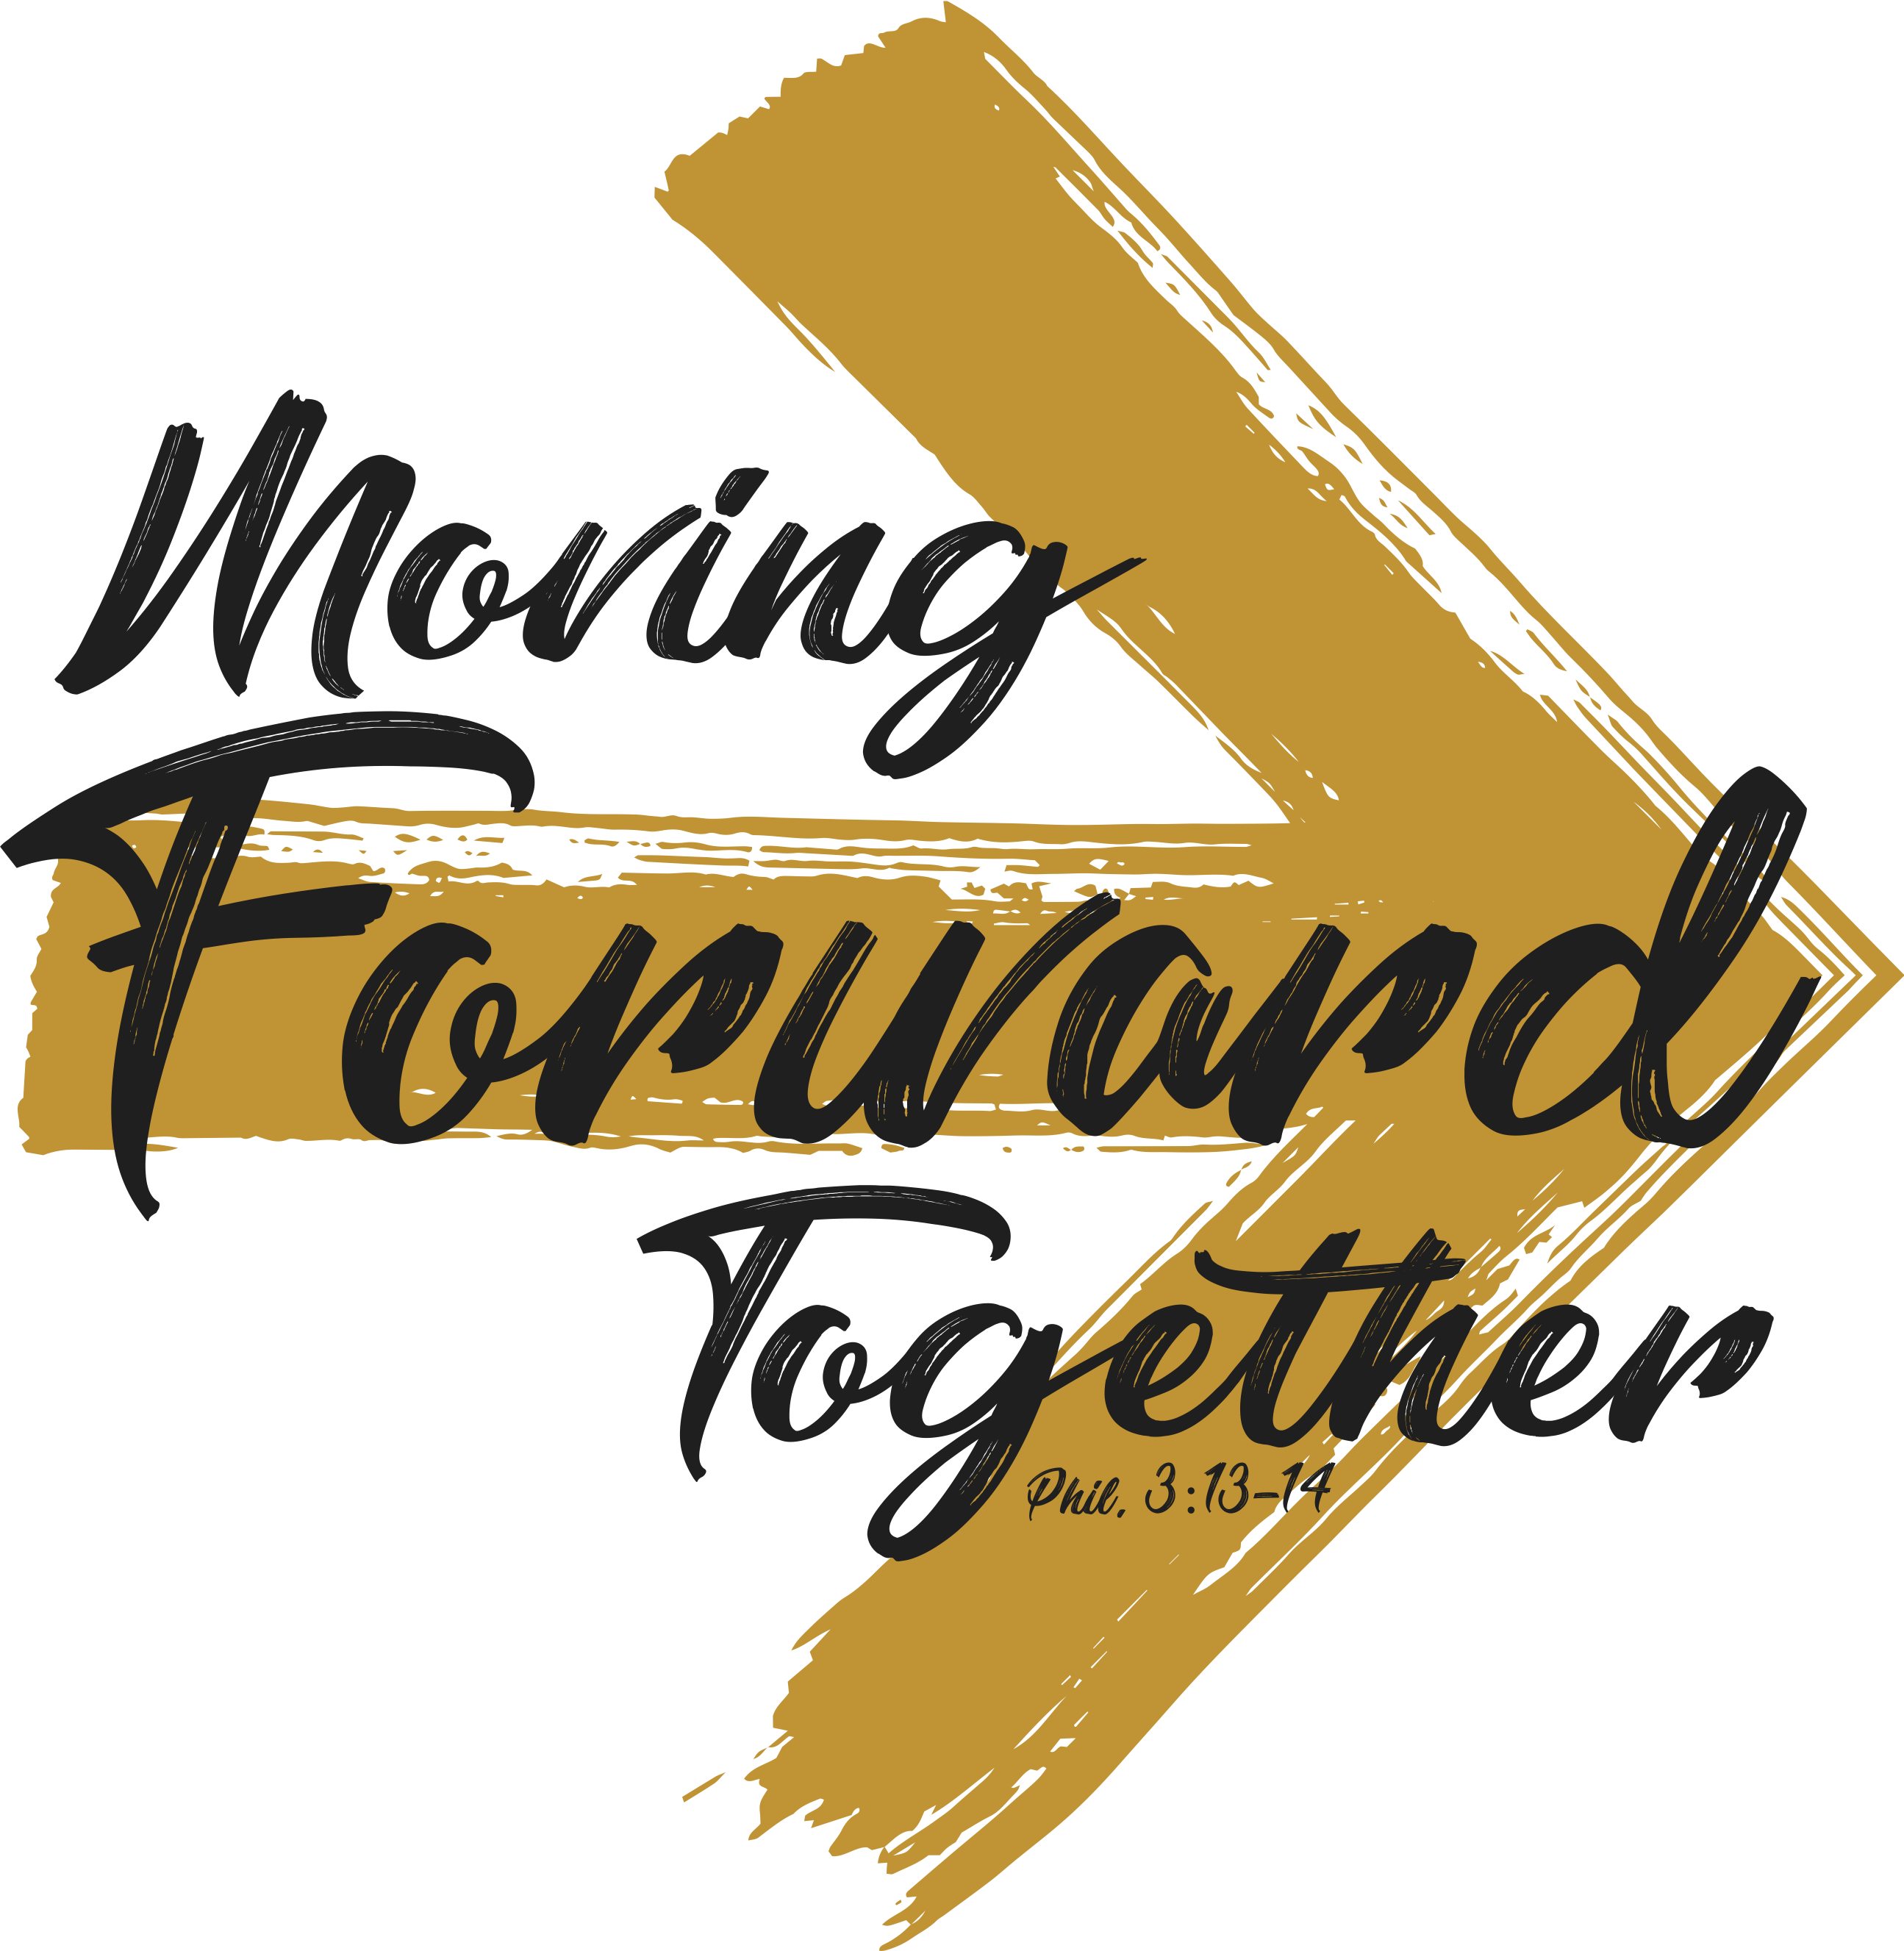 Forward Together - UniversalinMovement